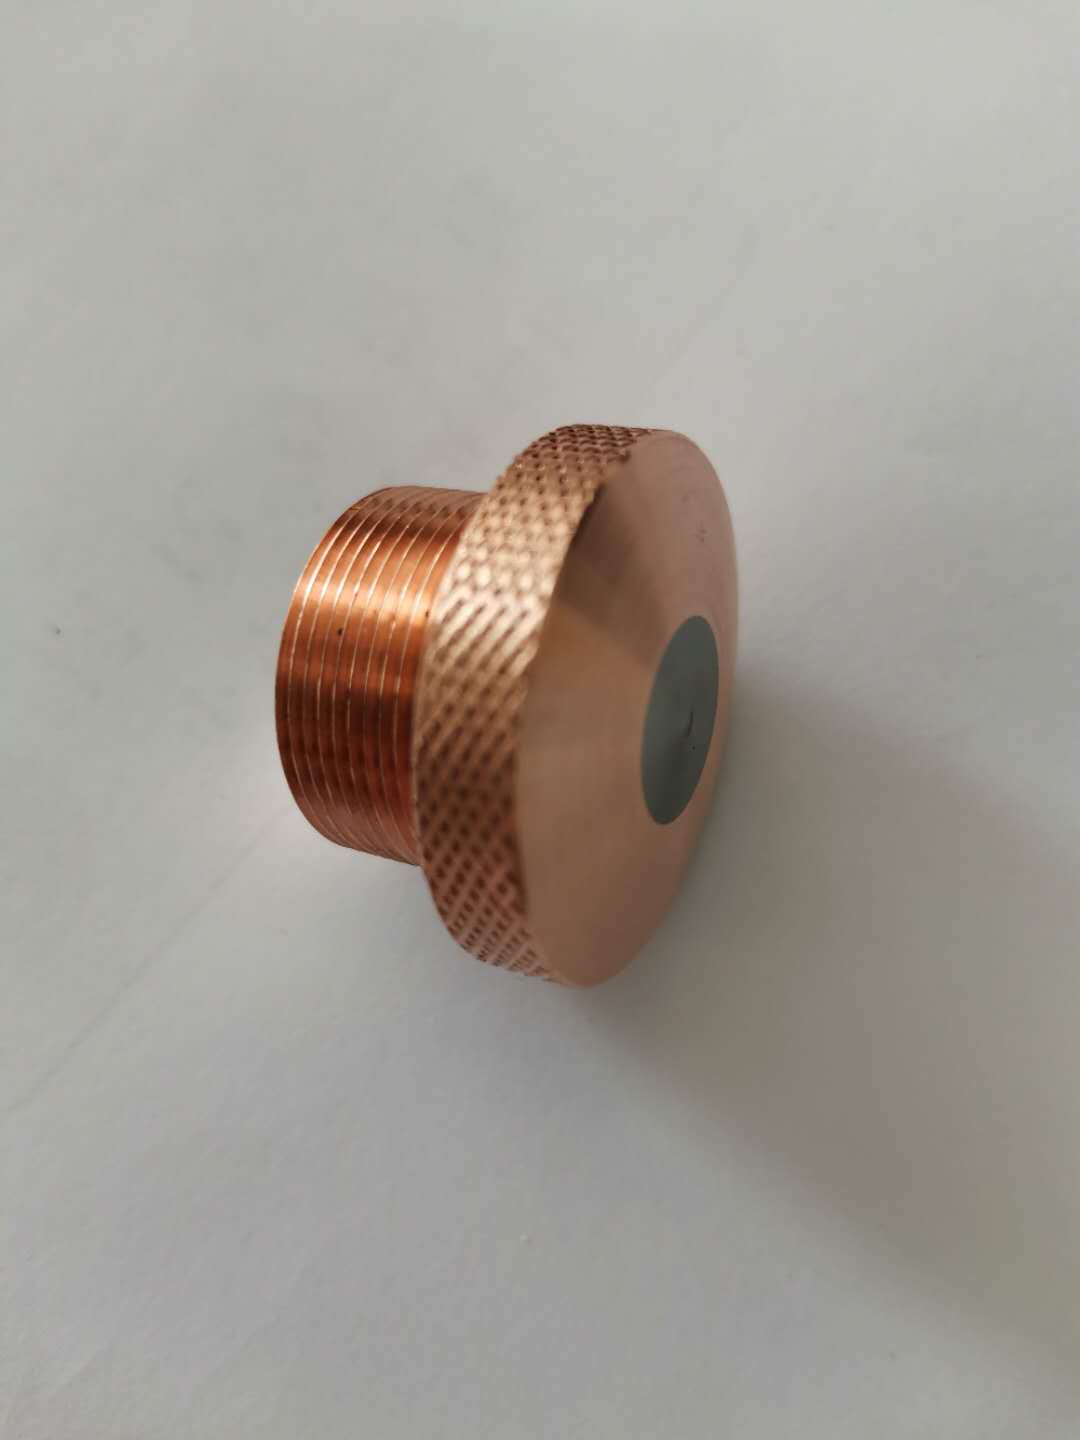 Copper tungsten electrode